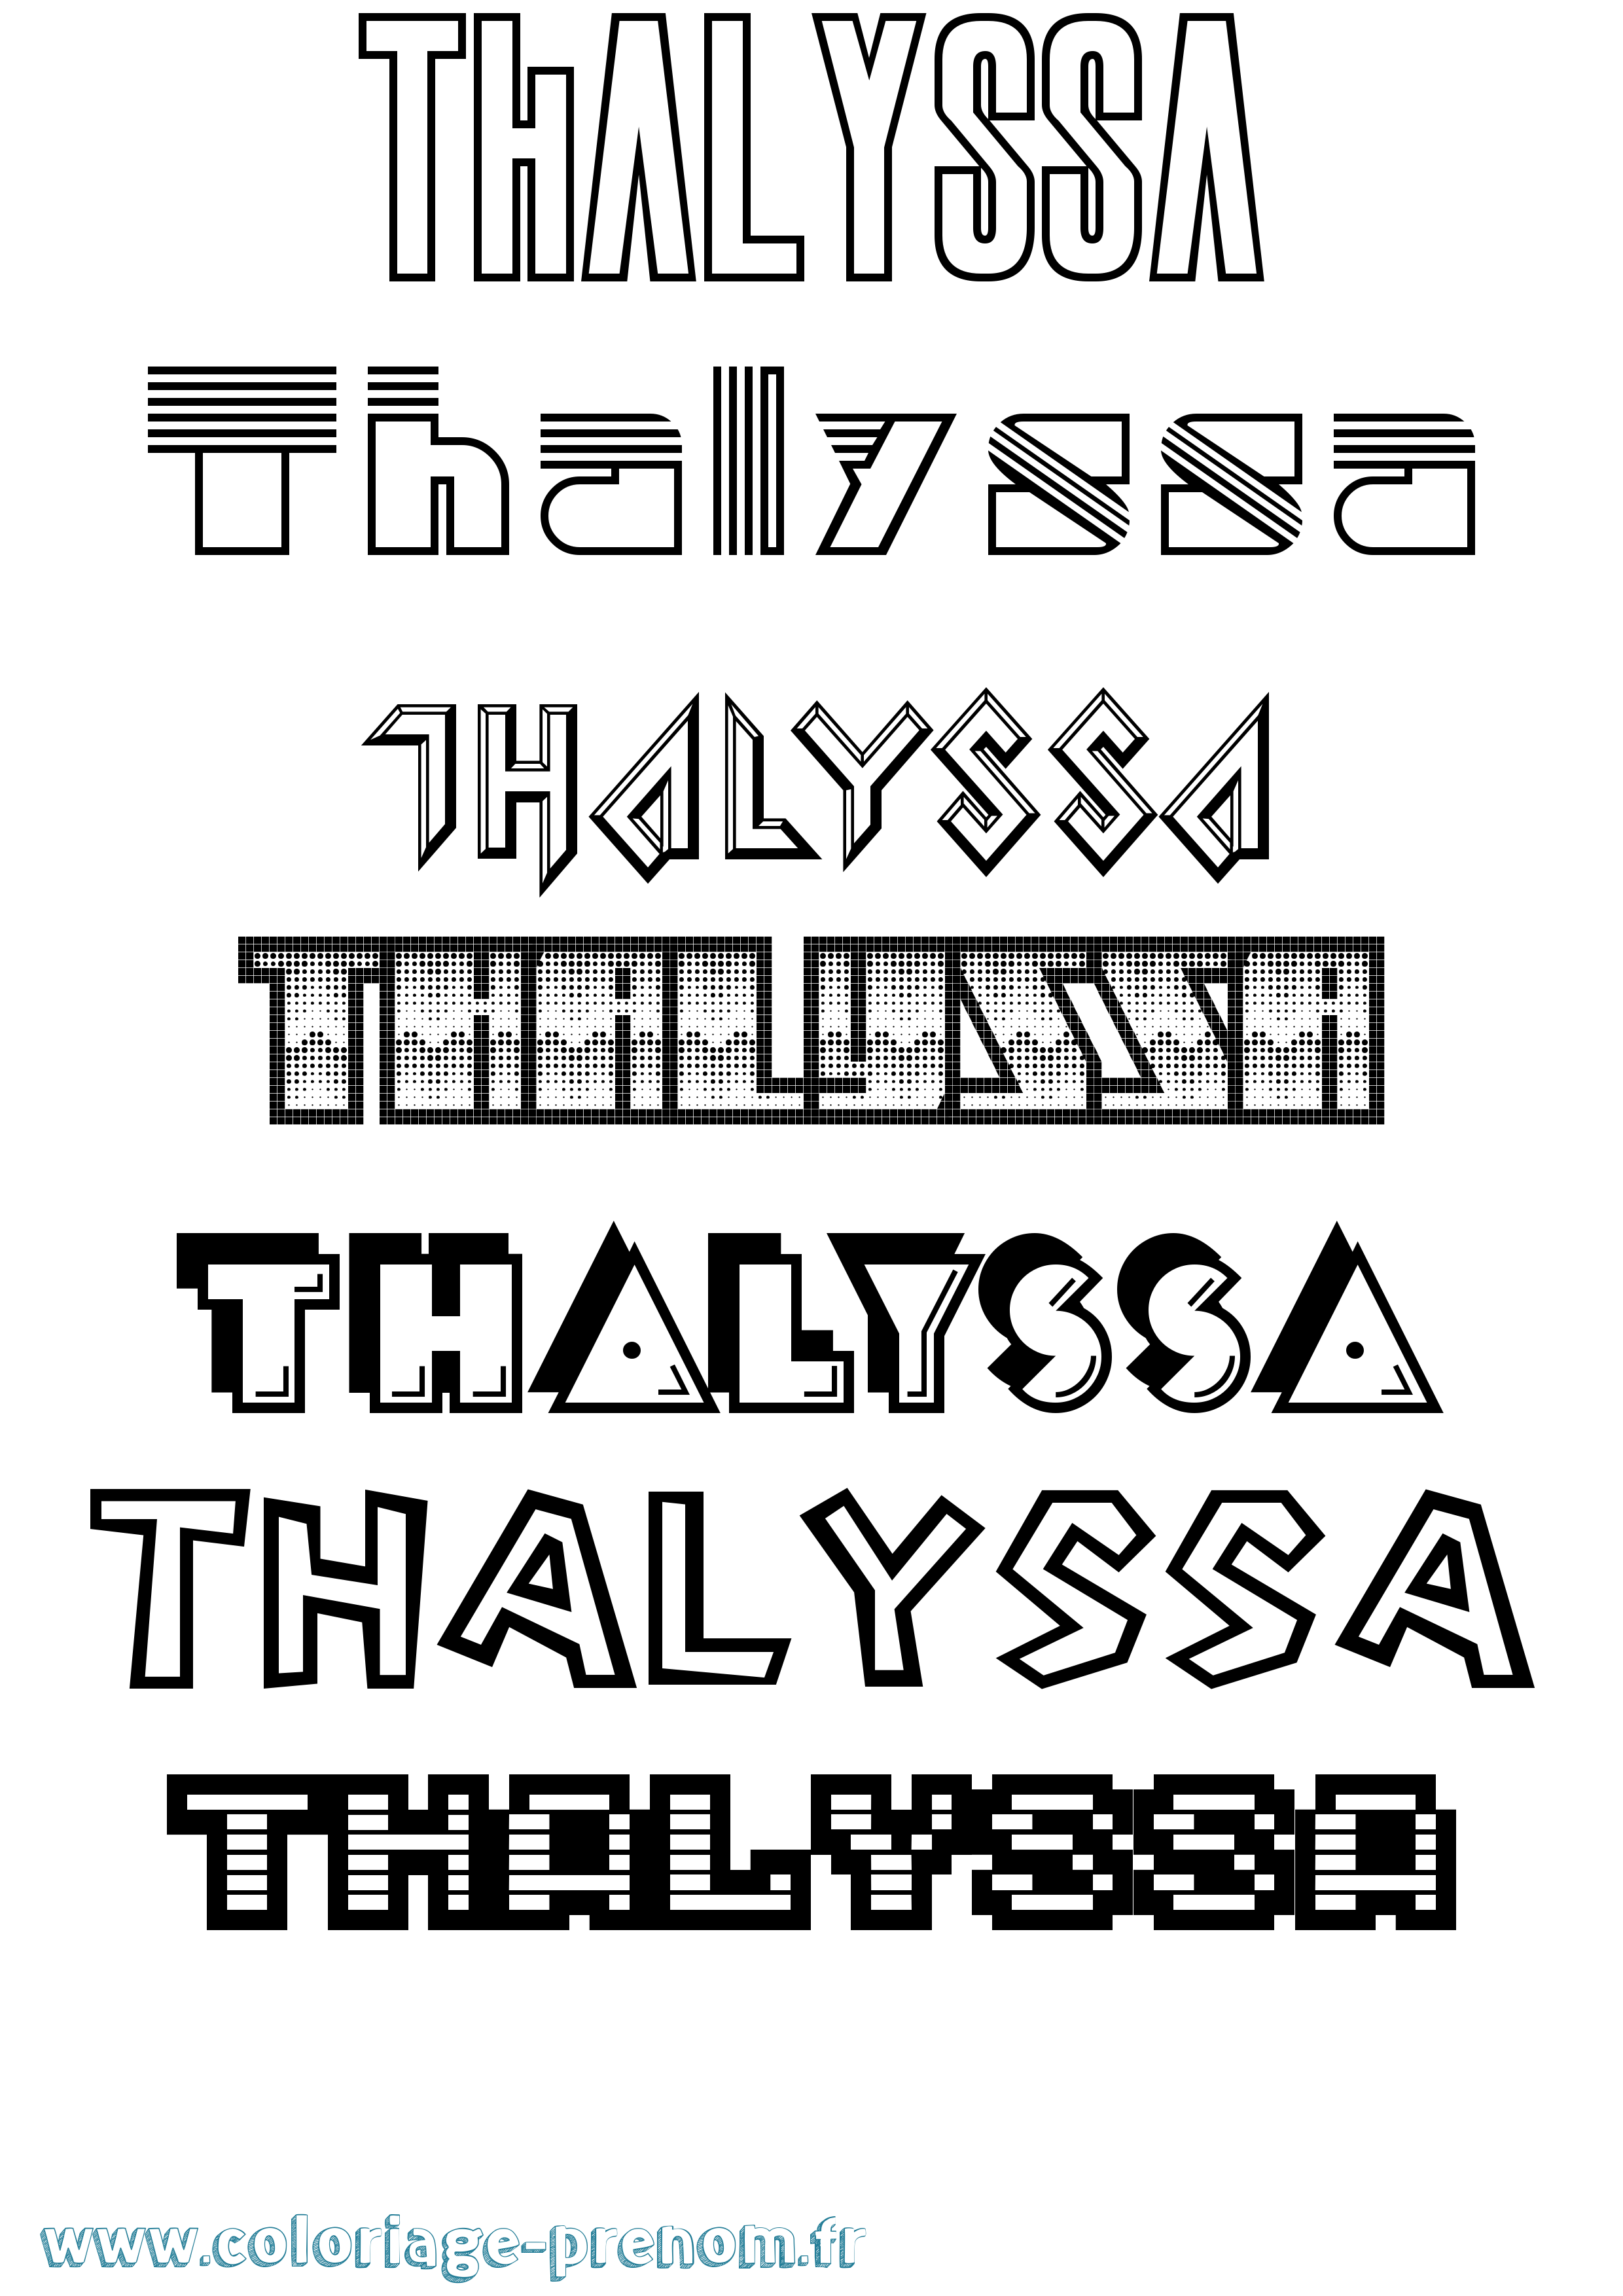 Coloriage prénom Thalyssa Jeux Vidéos